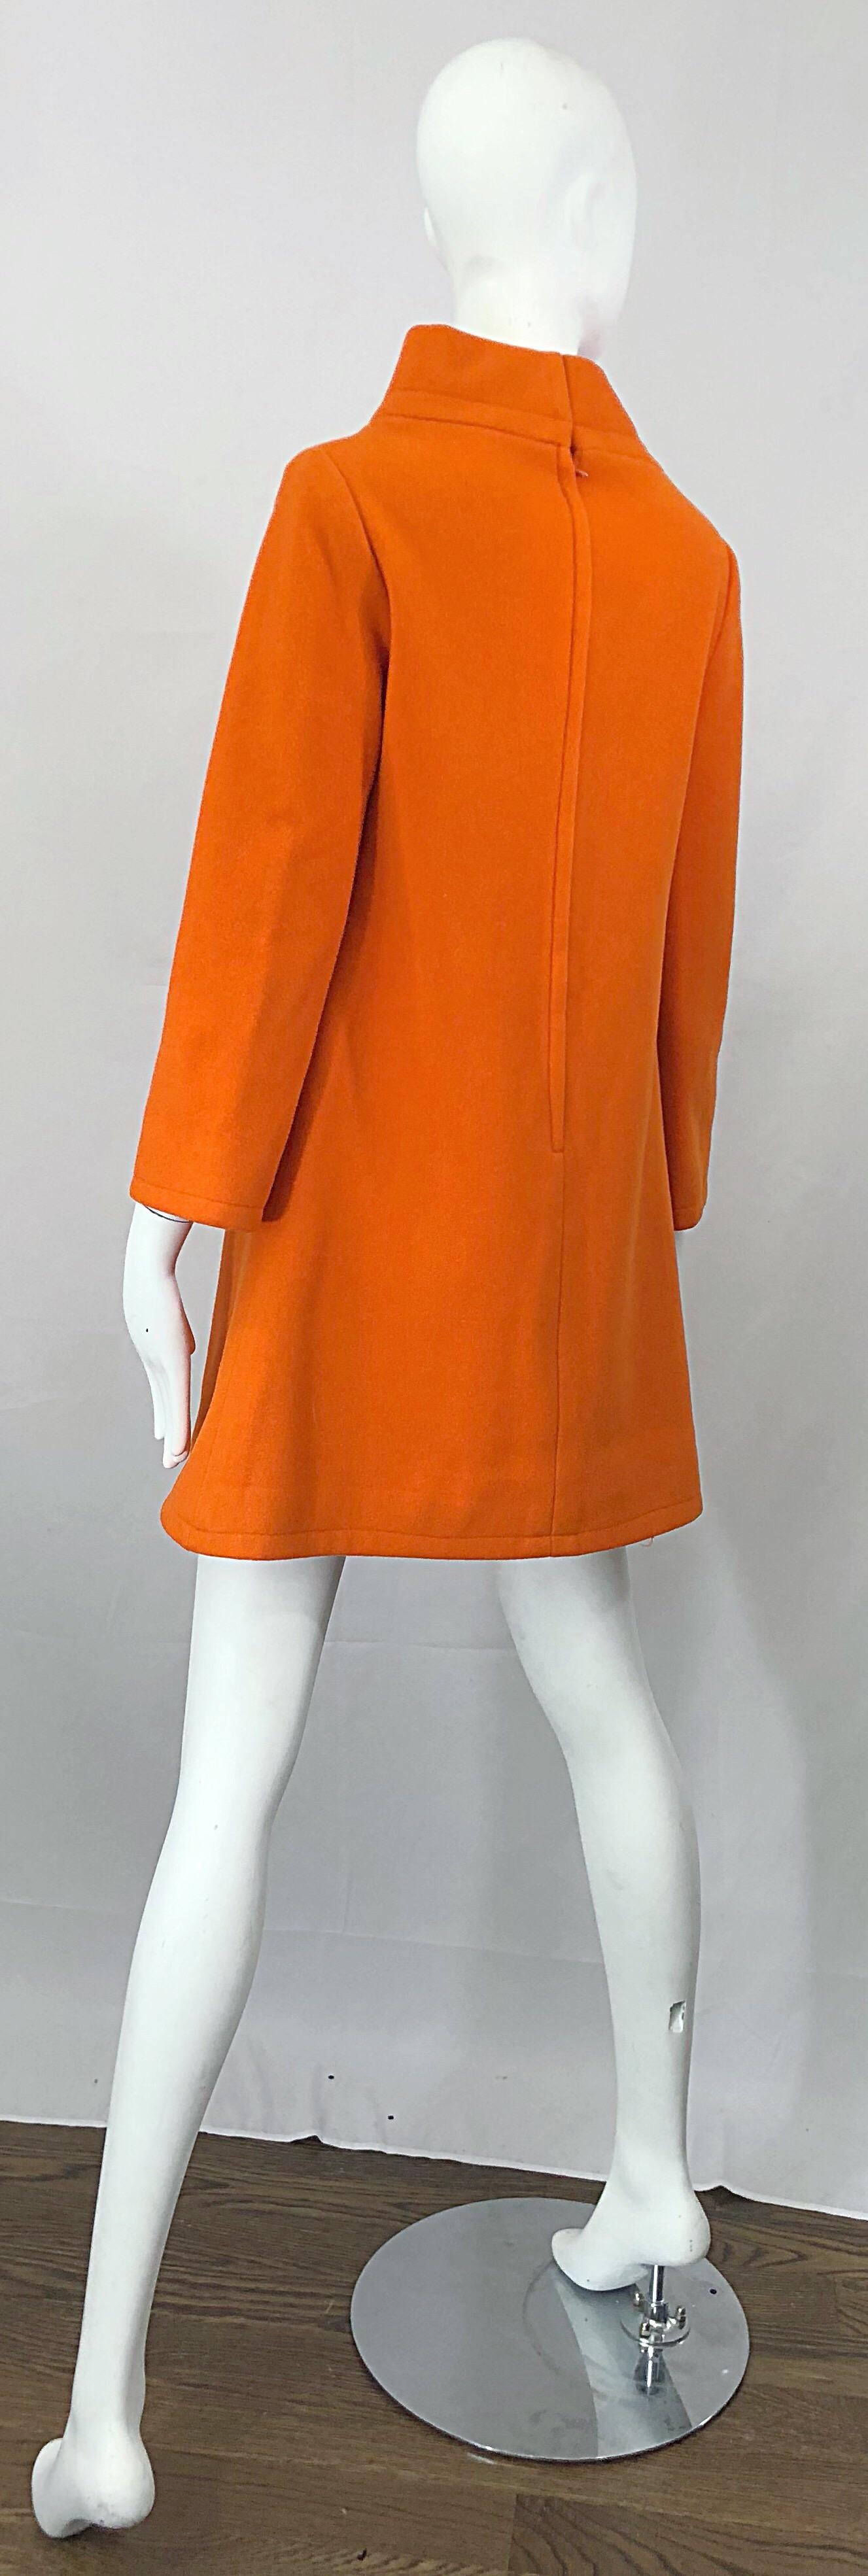 Chic 1960s Orange Wool Mod Space Age Cut Out A Line Vintage 60s Mini Dress Tunic 3